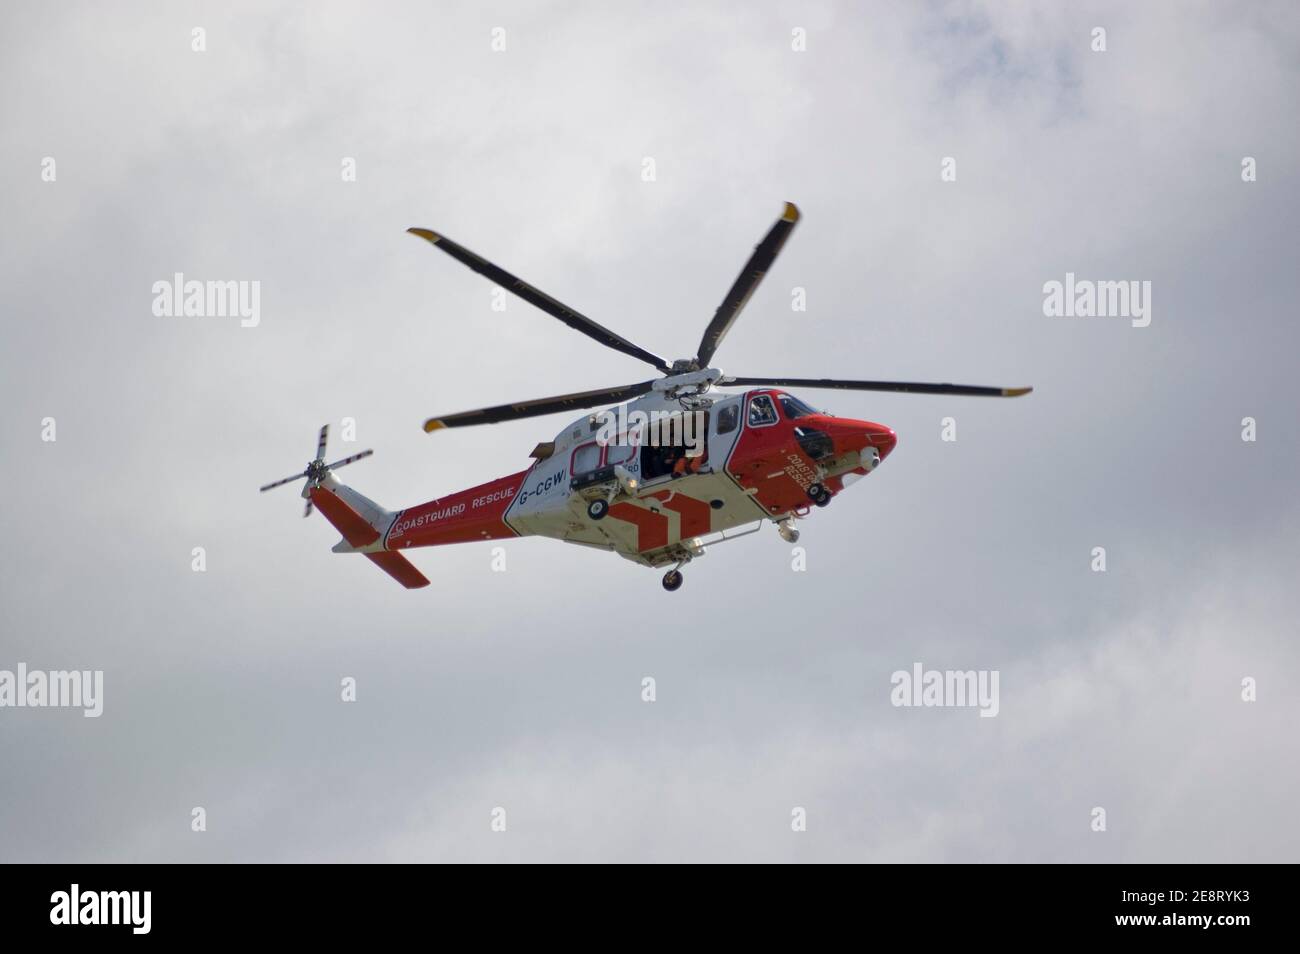 PORTLAND, DORSET, ENGLAND - AUGUST 31: Portland Coastguard Helicopter fliegt am 31 2012. August über dem Himmel. Der Agusta Westland Hubschrauber soll l Stockfoto